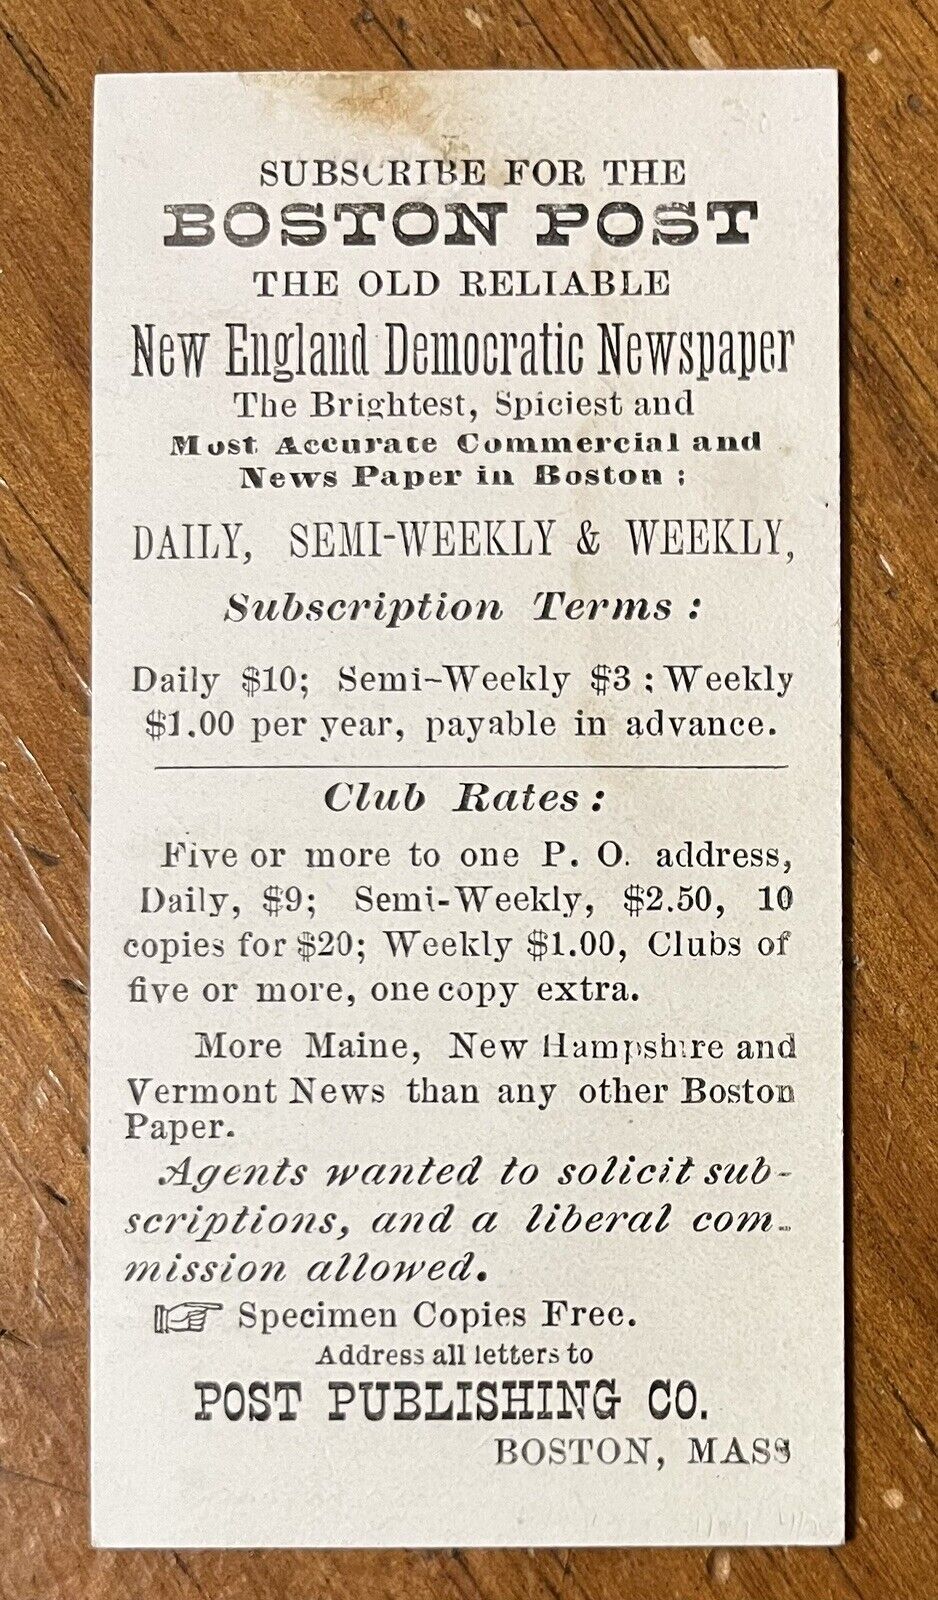 Boston Post Newspaper 1882-1883 Pocket Calendar Trade Card 4x2 Inches- Original